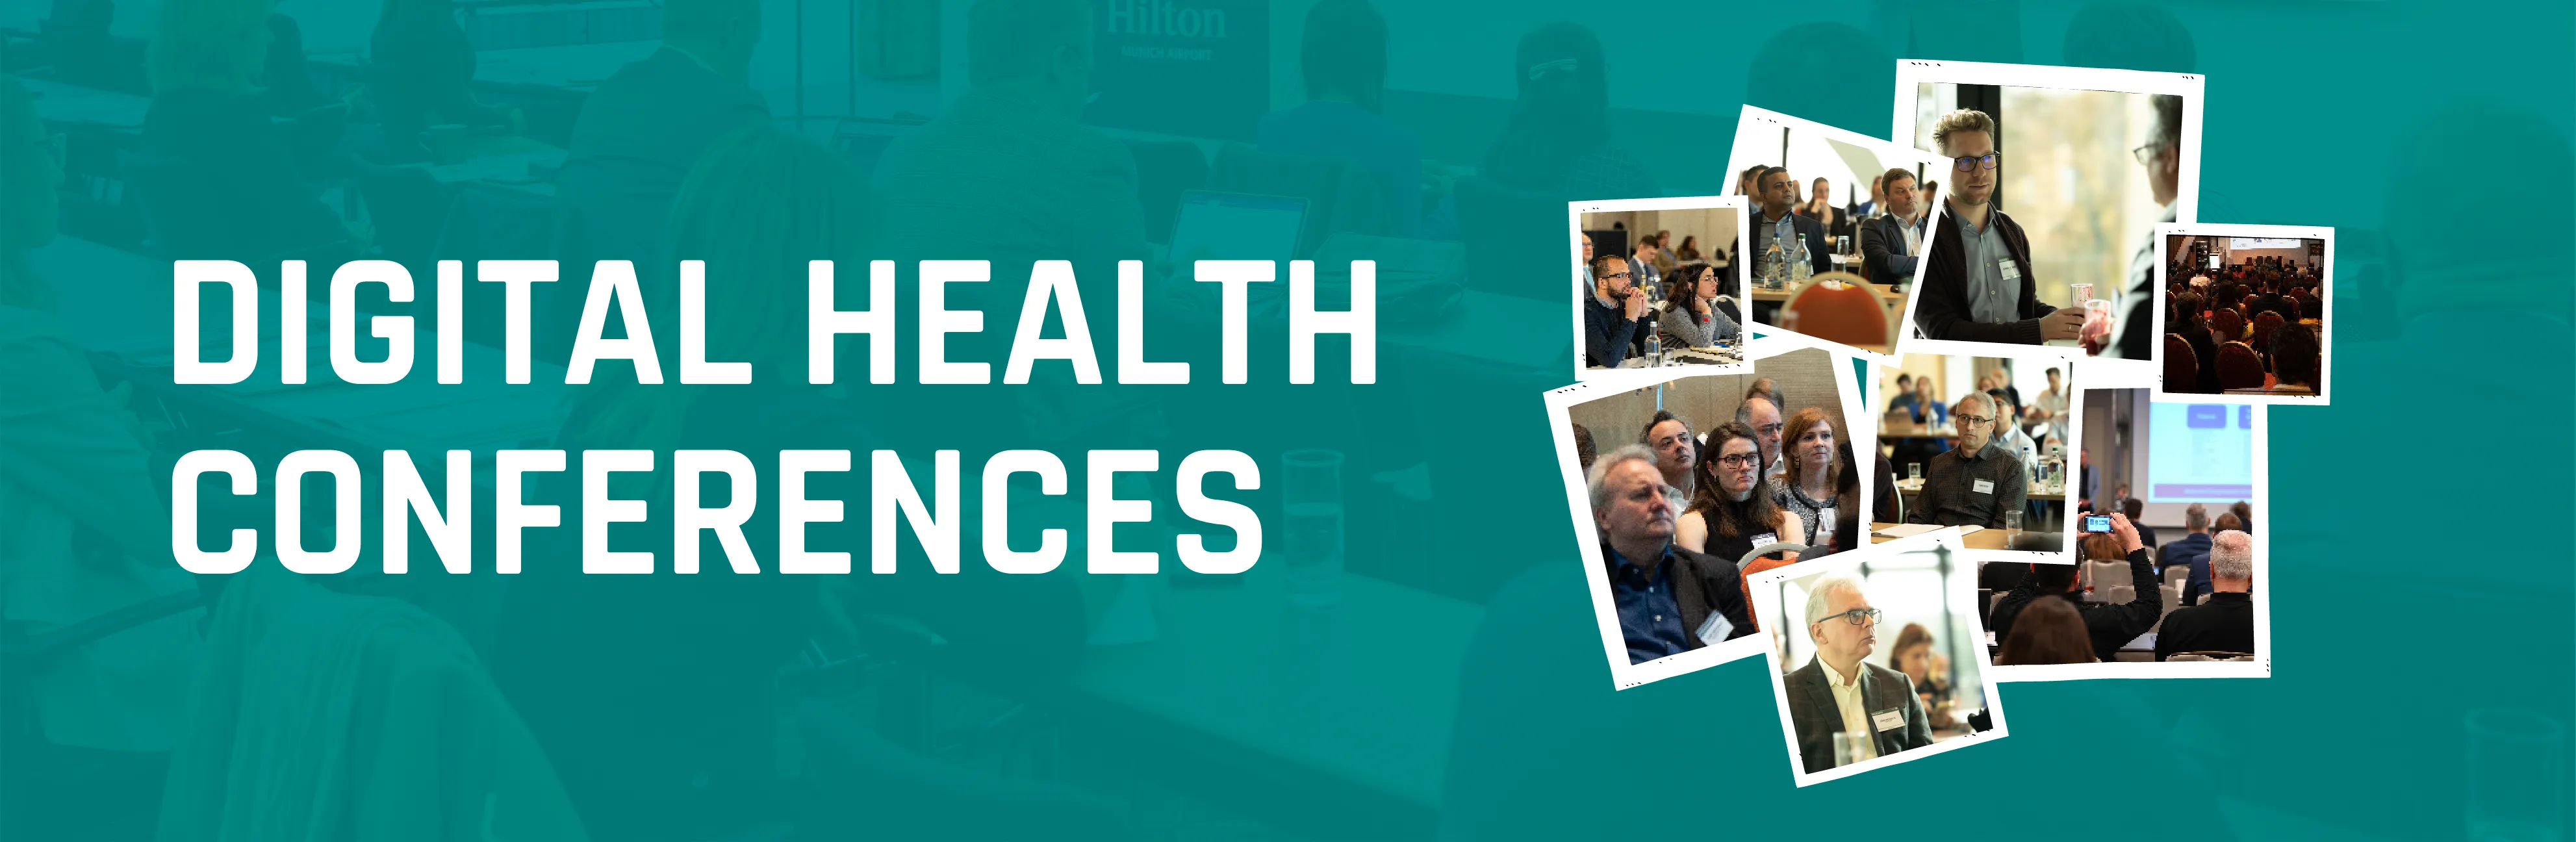 Digital Health Conferences 